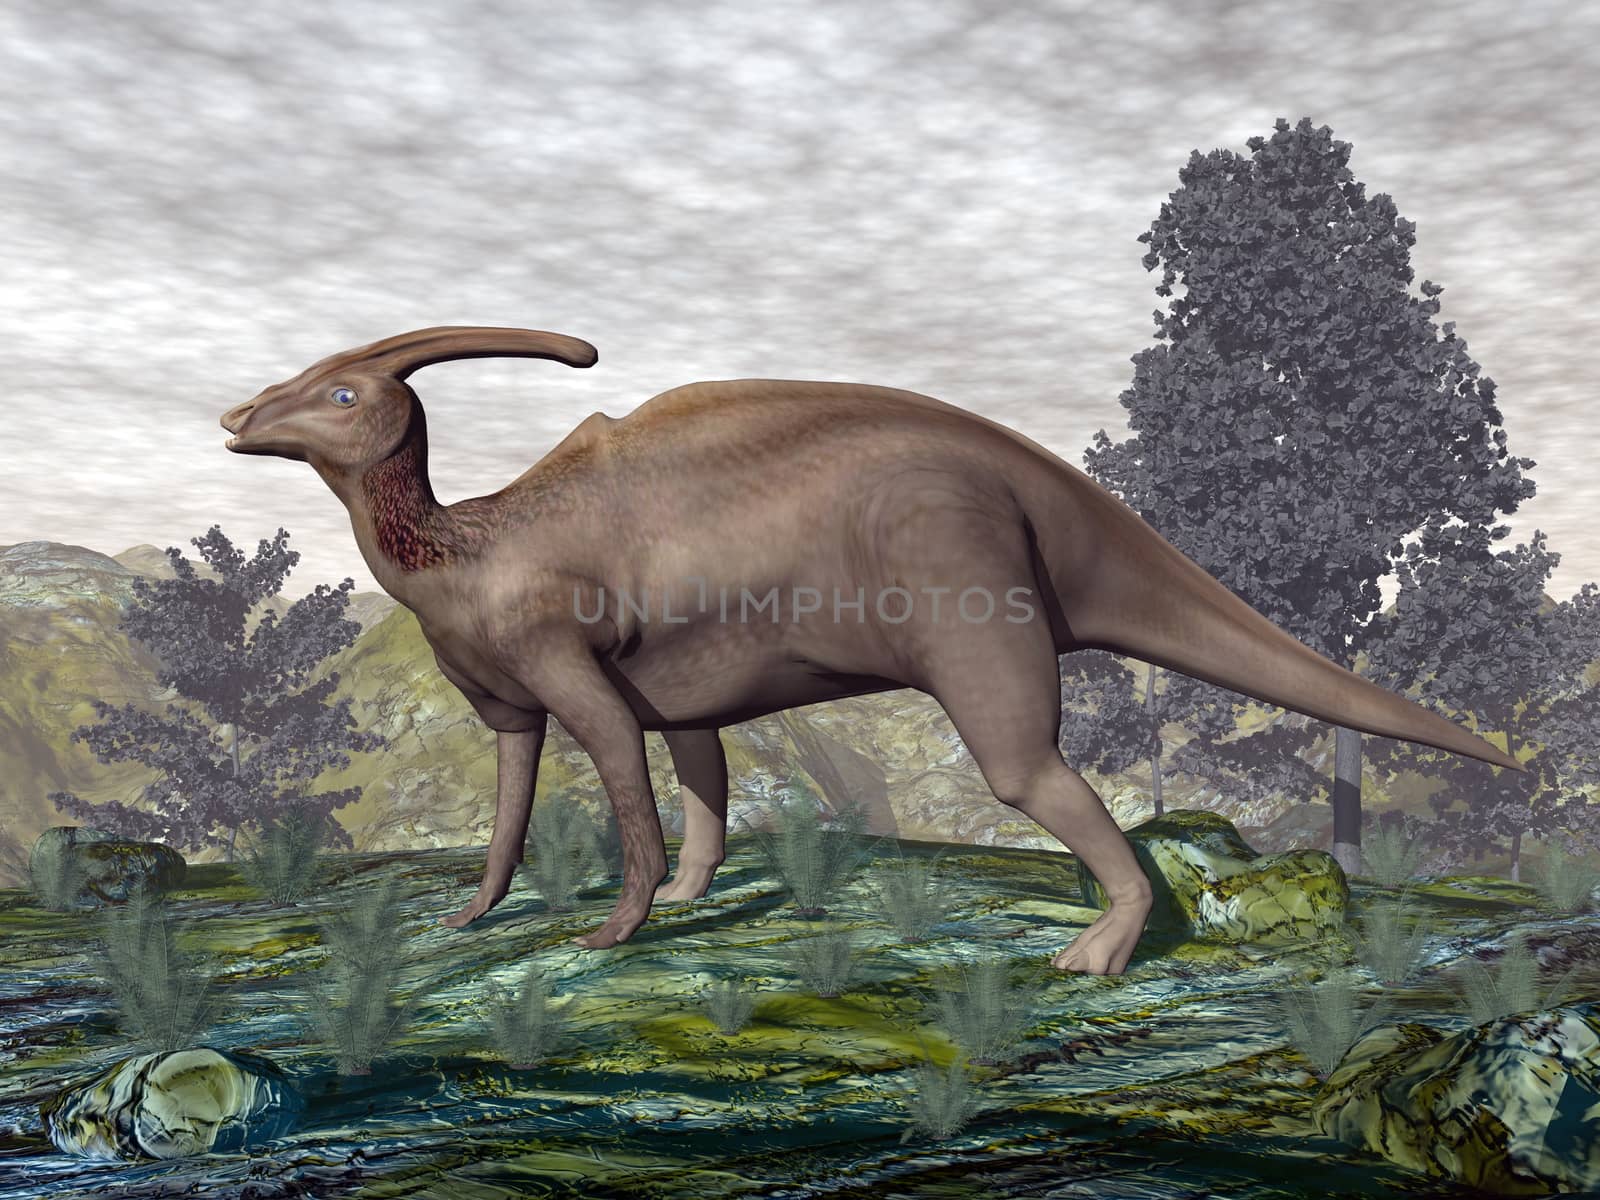 Parasaurolophus dinosaur walking next to gingko trees and onychiopsis plants - 3D render